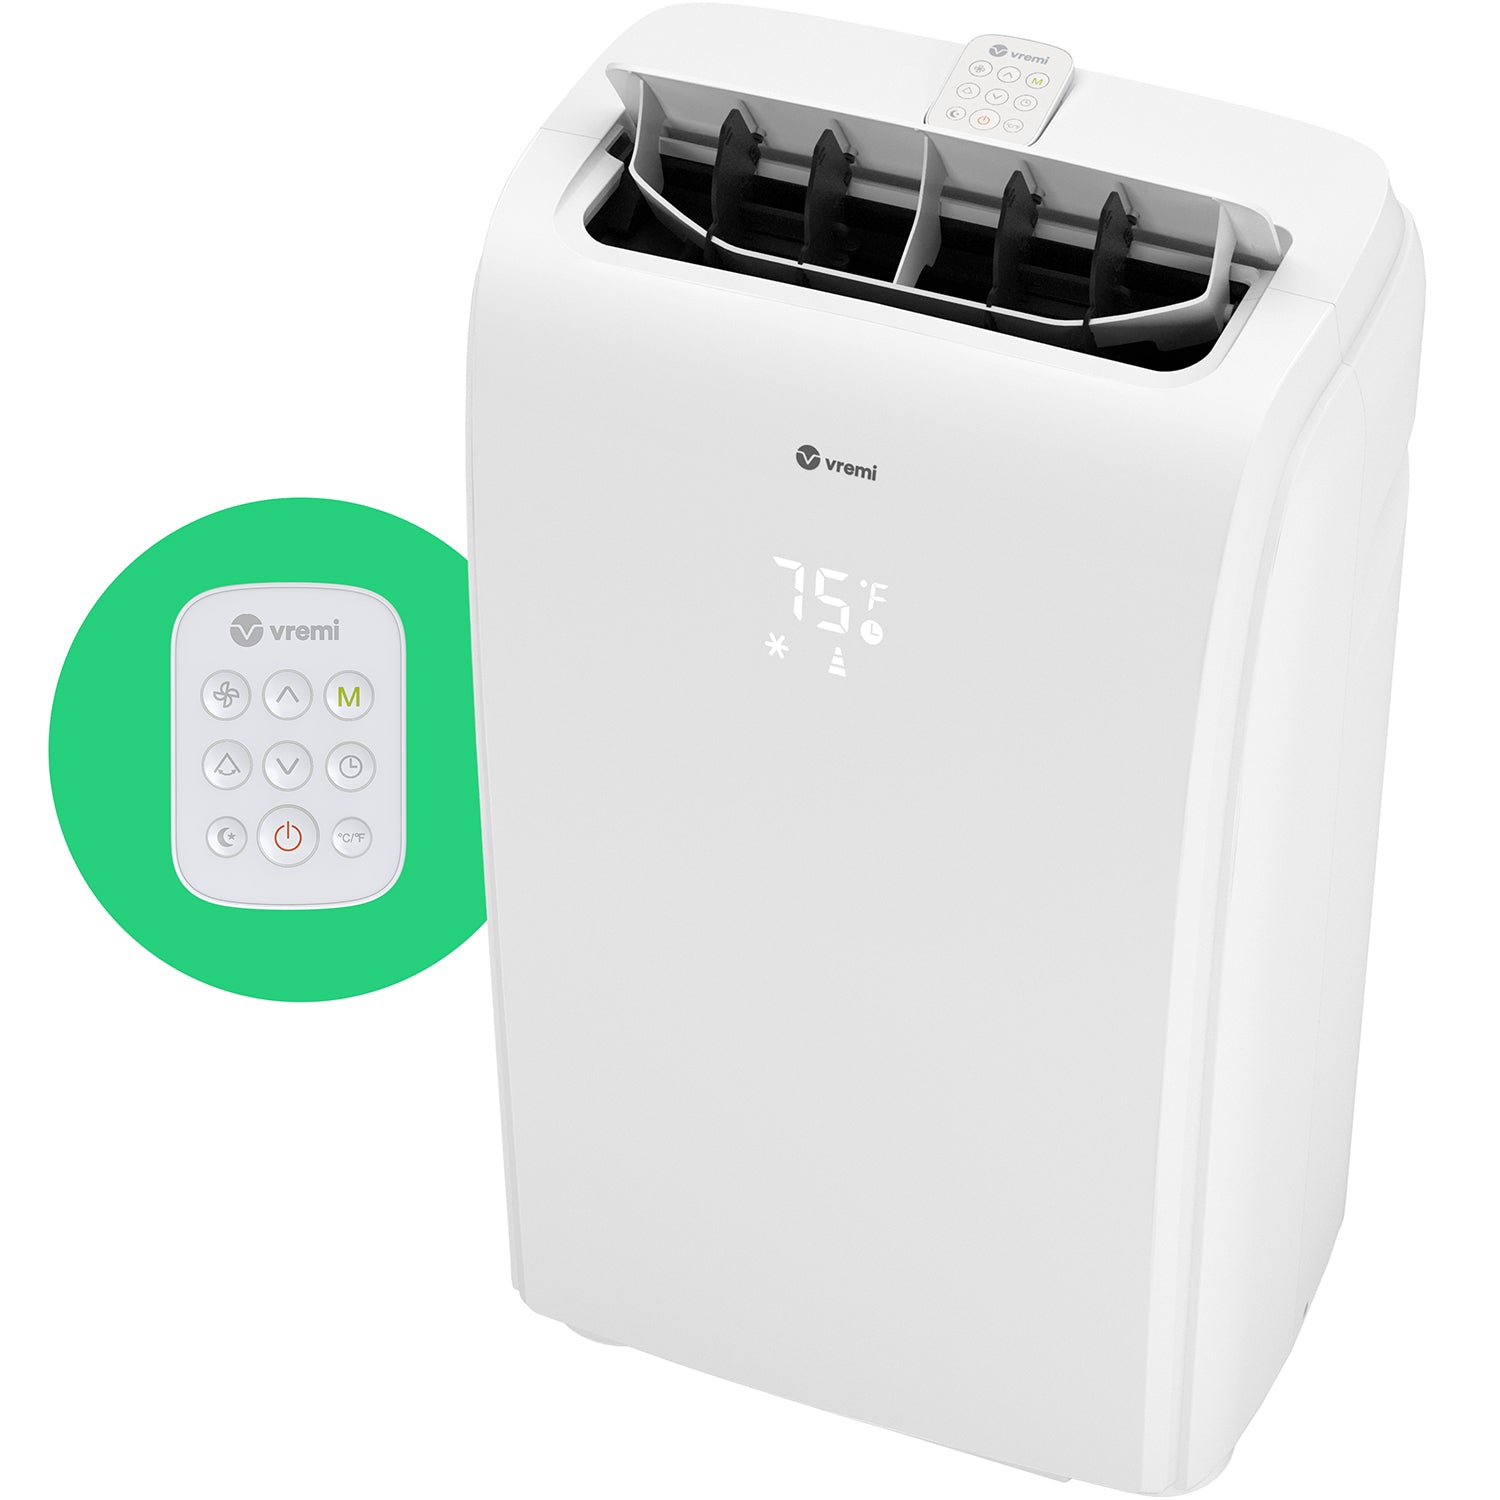 New in Box B+D Portable Air Conditioner 10,000 BTU - appliances